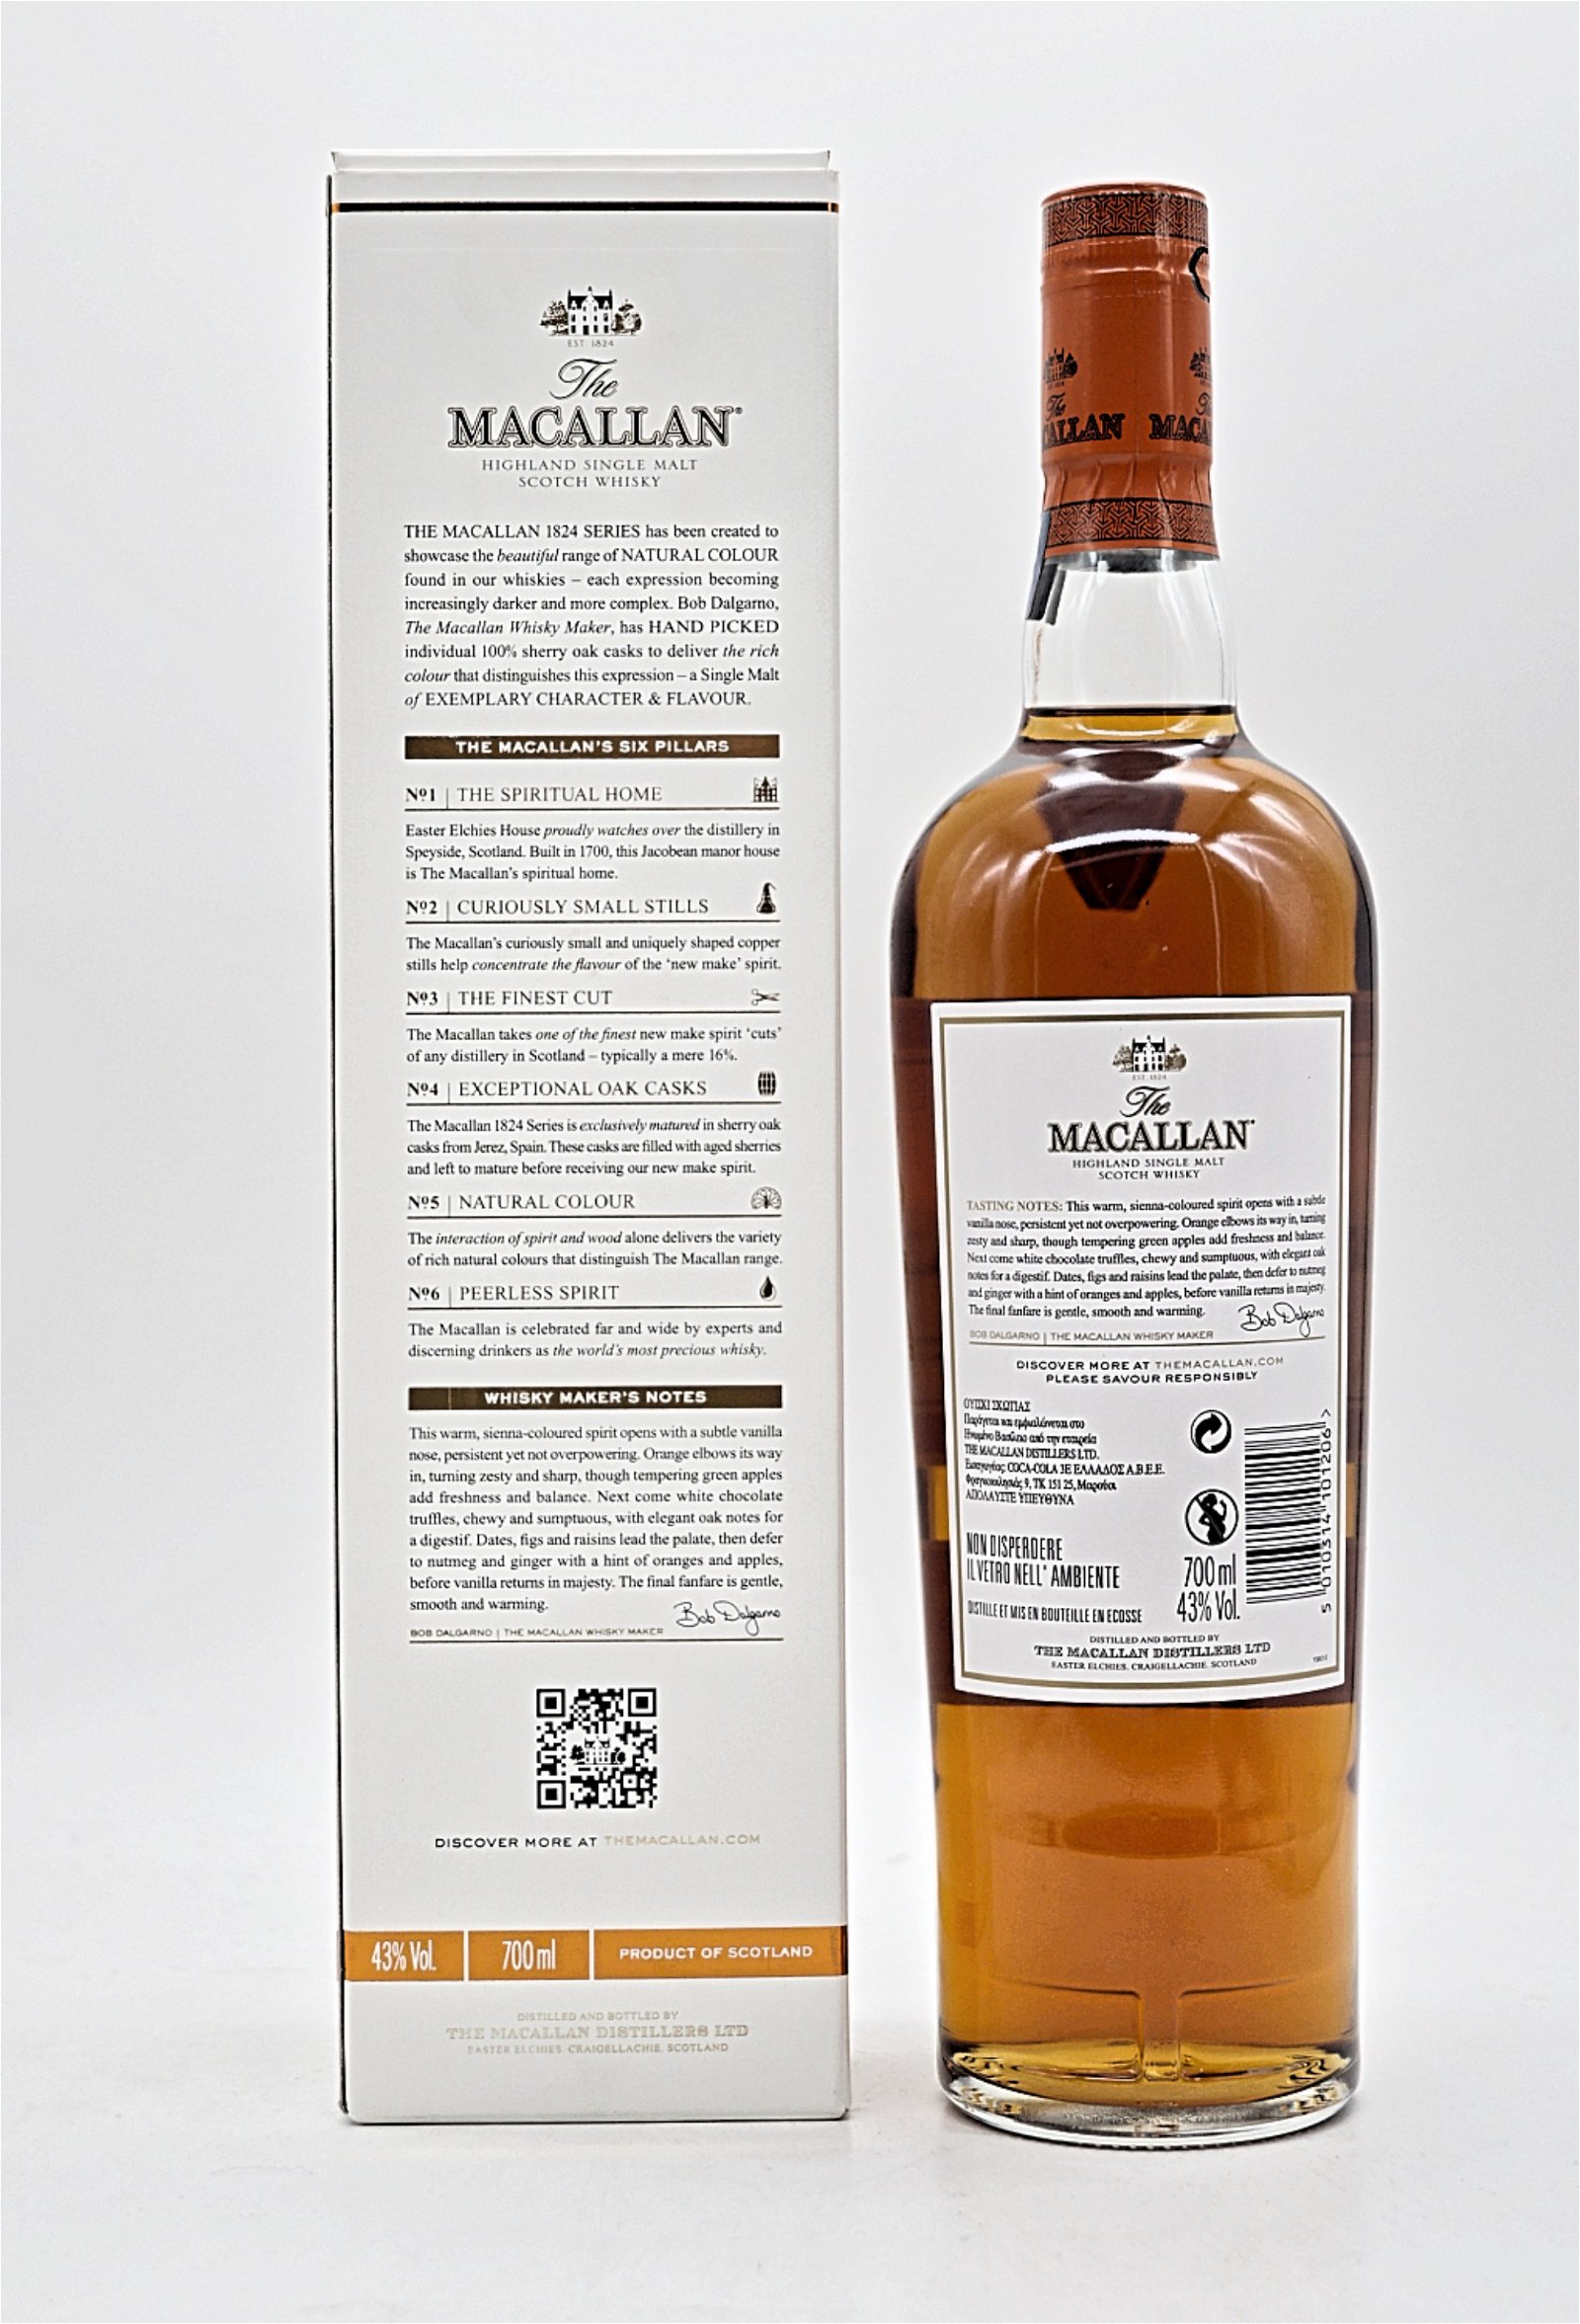 The Macallan Sienna Highland Single Malt Scotch Whisky